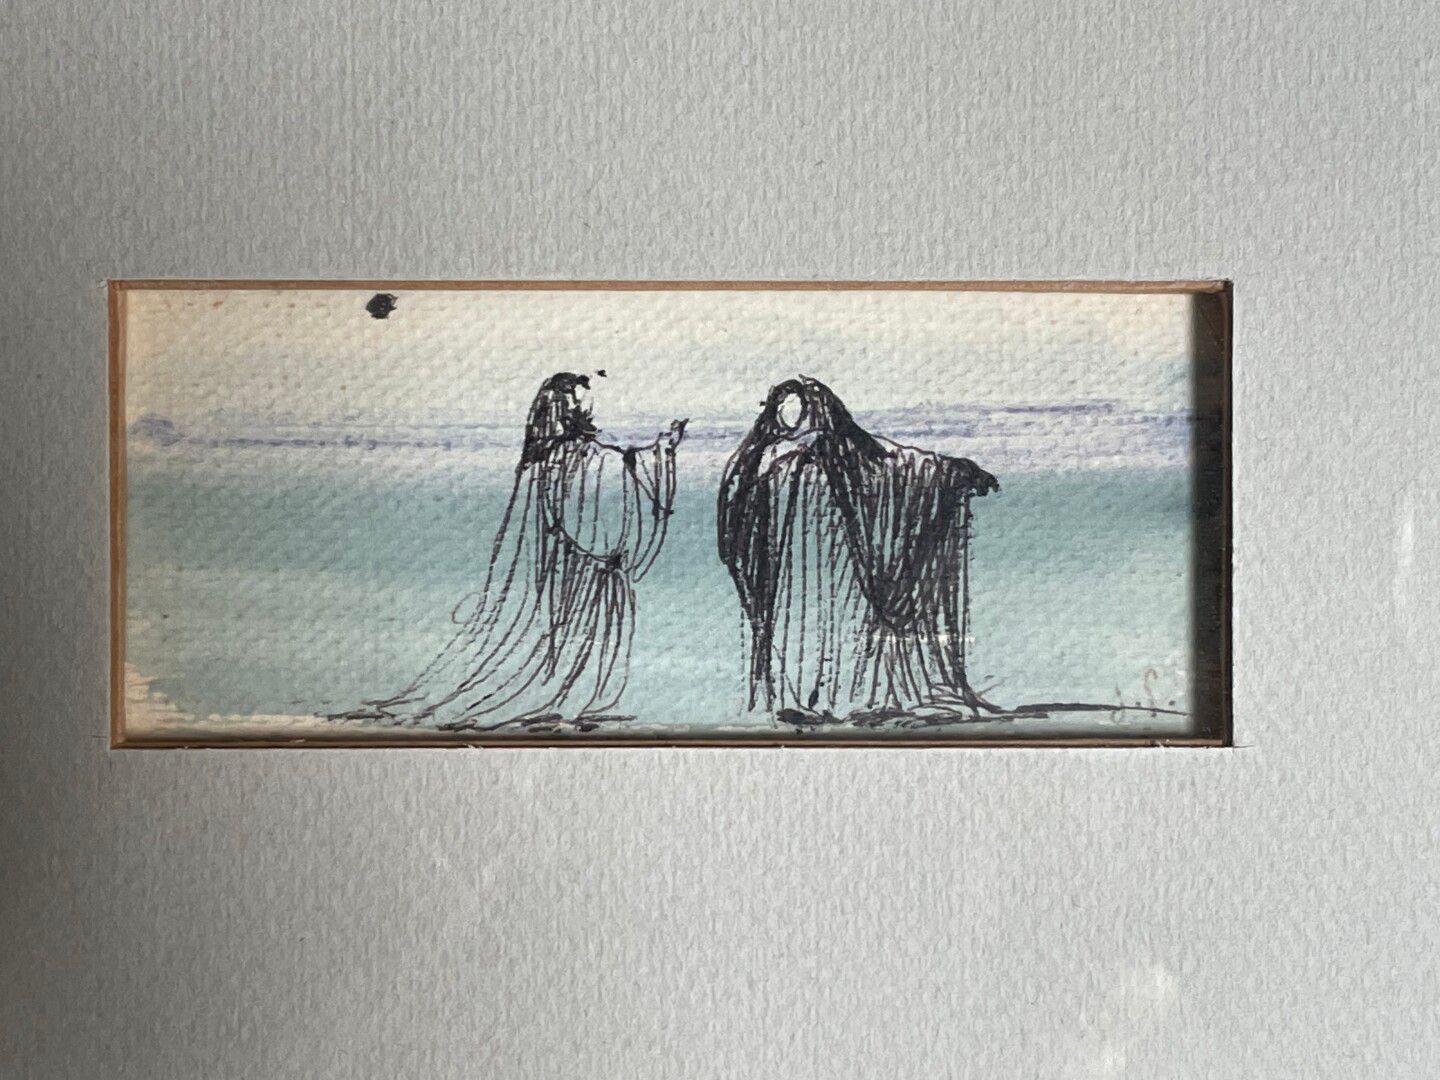 Null 何塞-奎罗加(1930-2010)

戏剧服装项目

水墨，水彩画。

4.5 x 11 cm

框架：26 x 36厘米